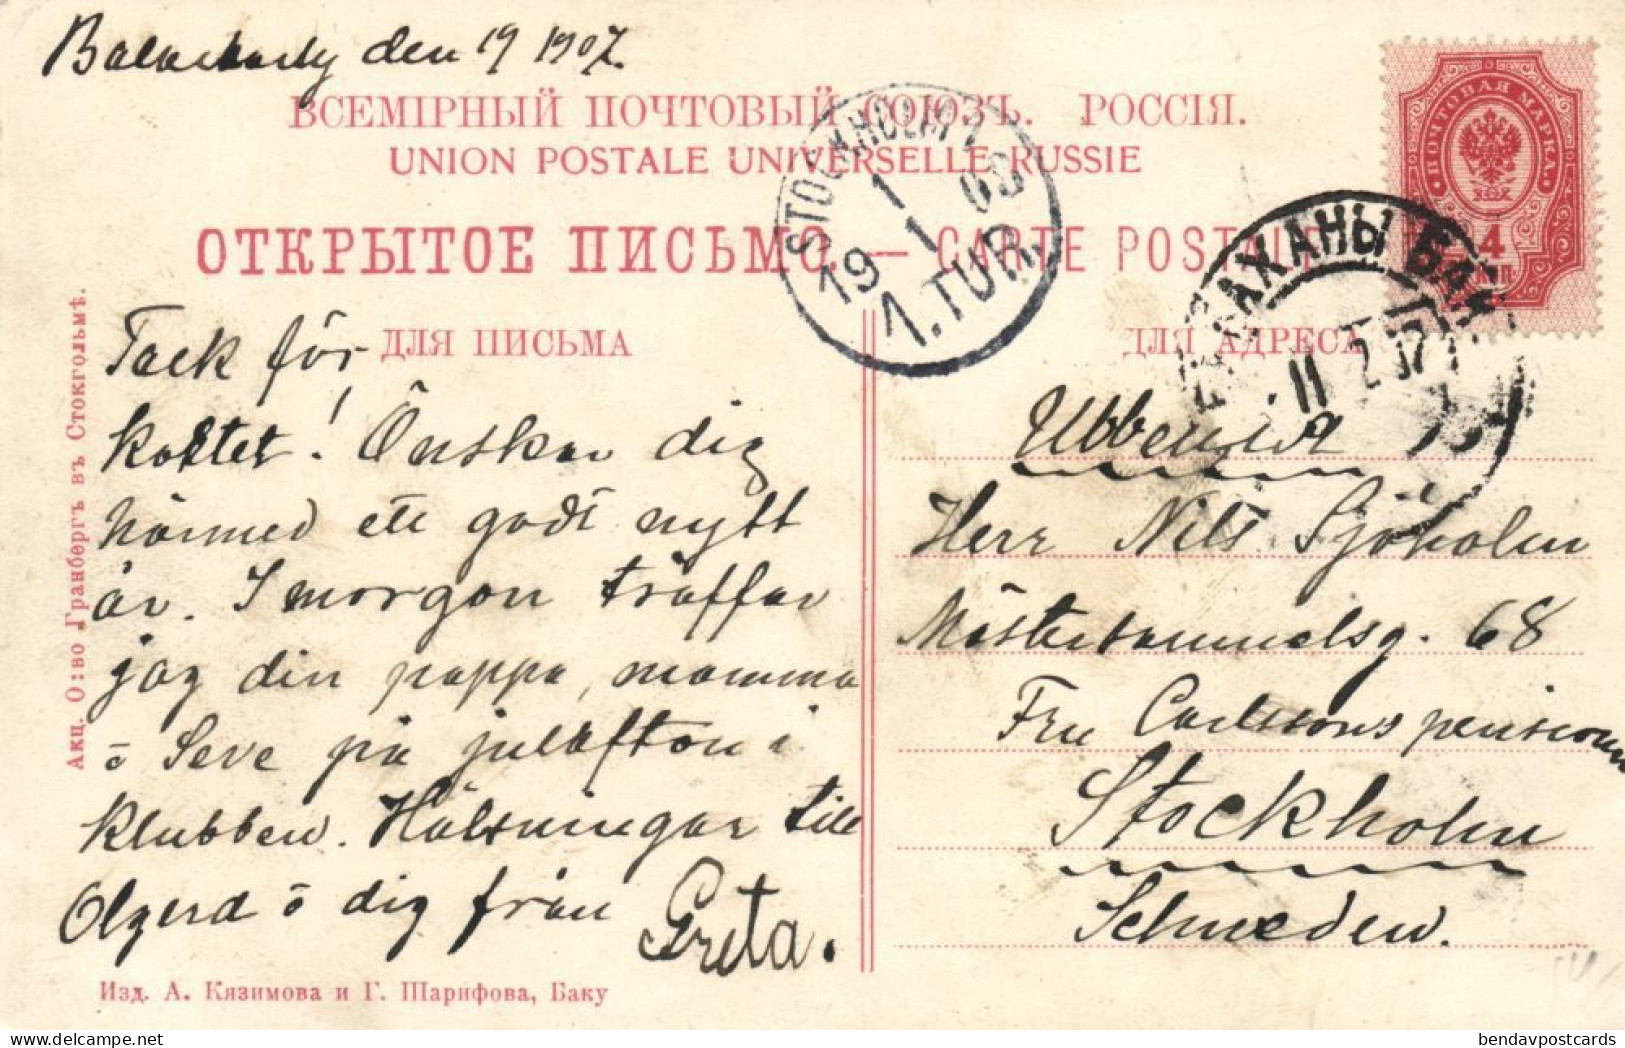 Azerbaijan Russia, BAKU BACOU, Railway Station (1907) Postcard - Azerbaïjan